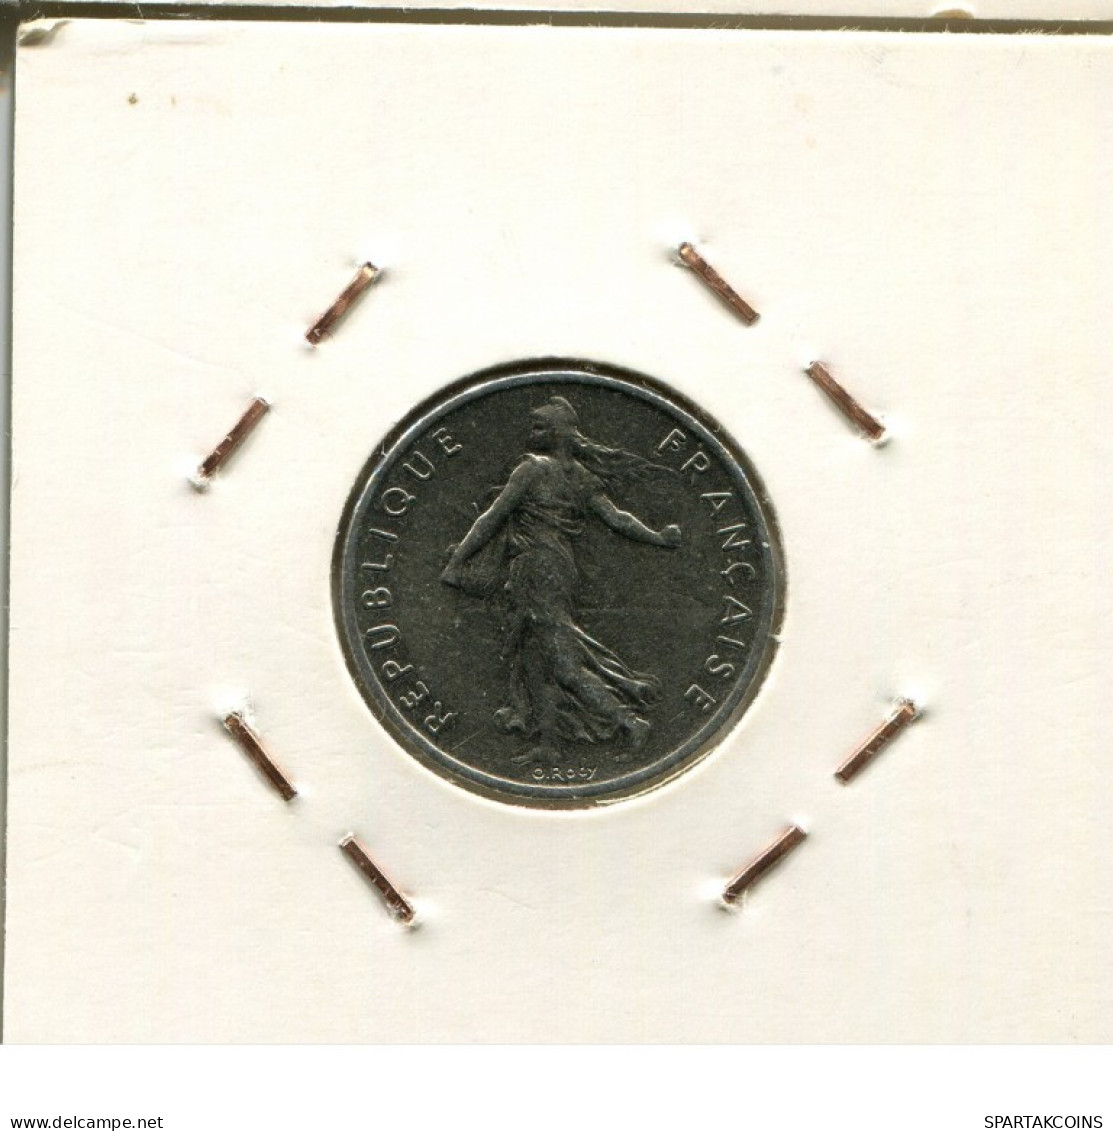 1/2 FRANC 1976 FRANCE Coin French Coin #AM922.U.A - 1/2 Franc